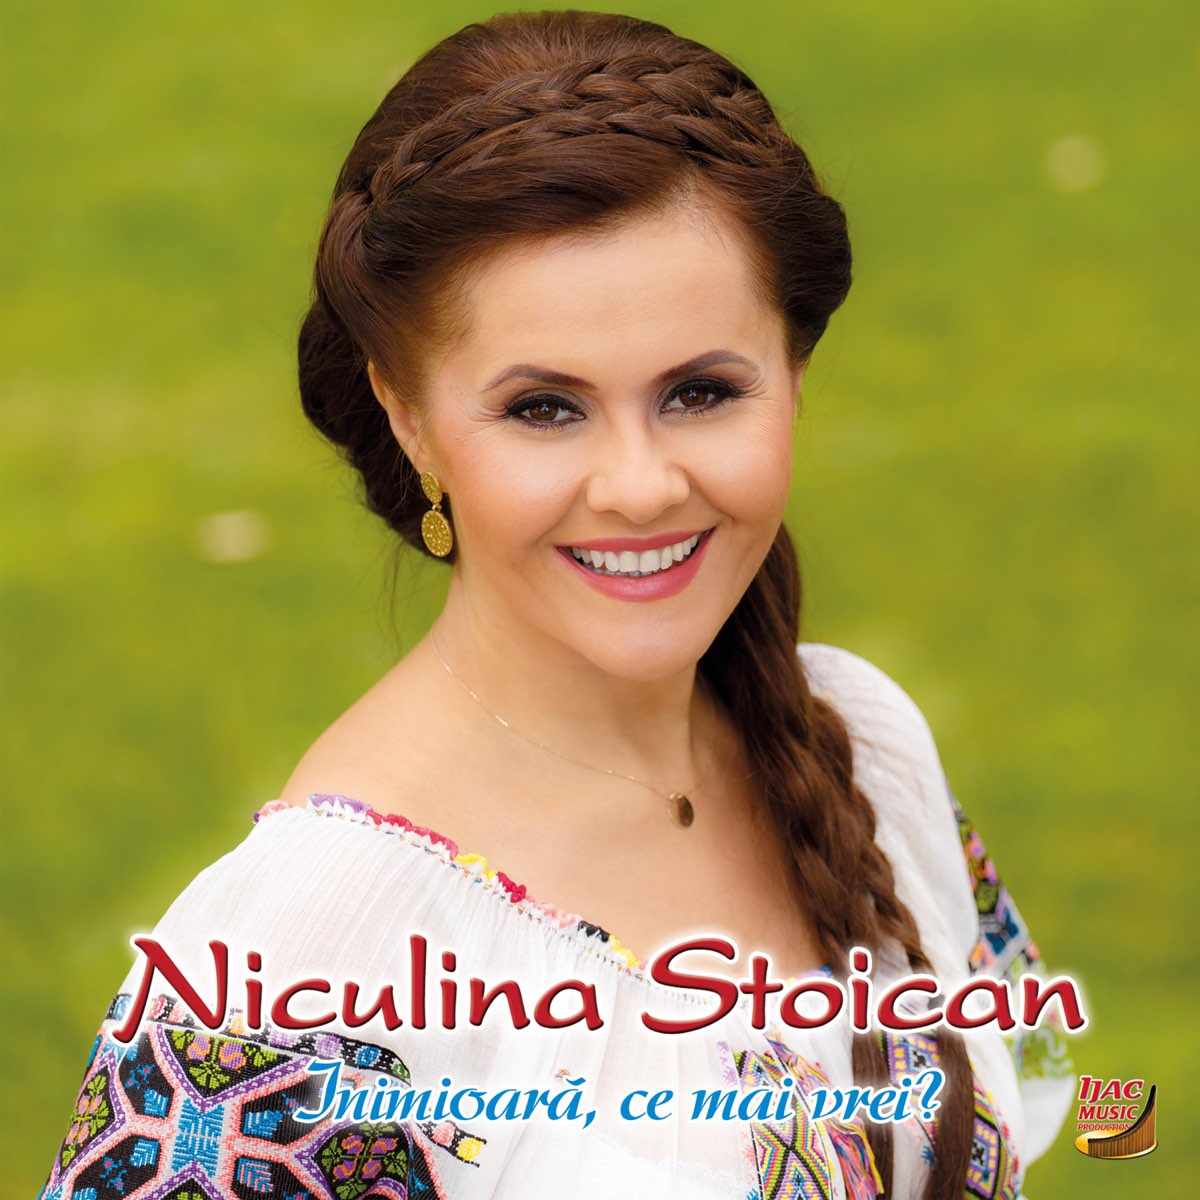 niculina stoican album download torent